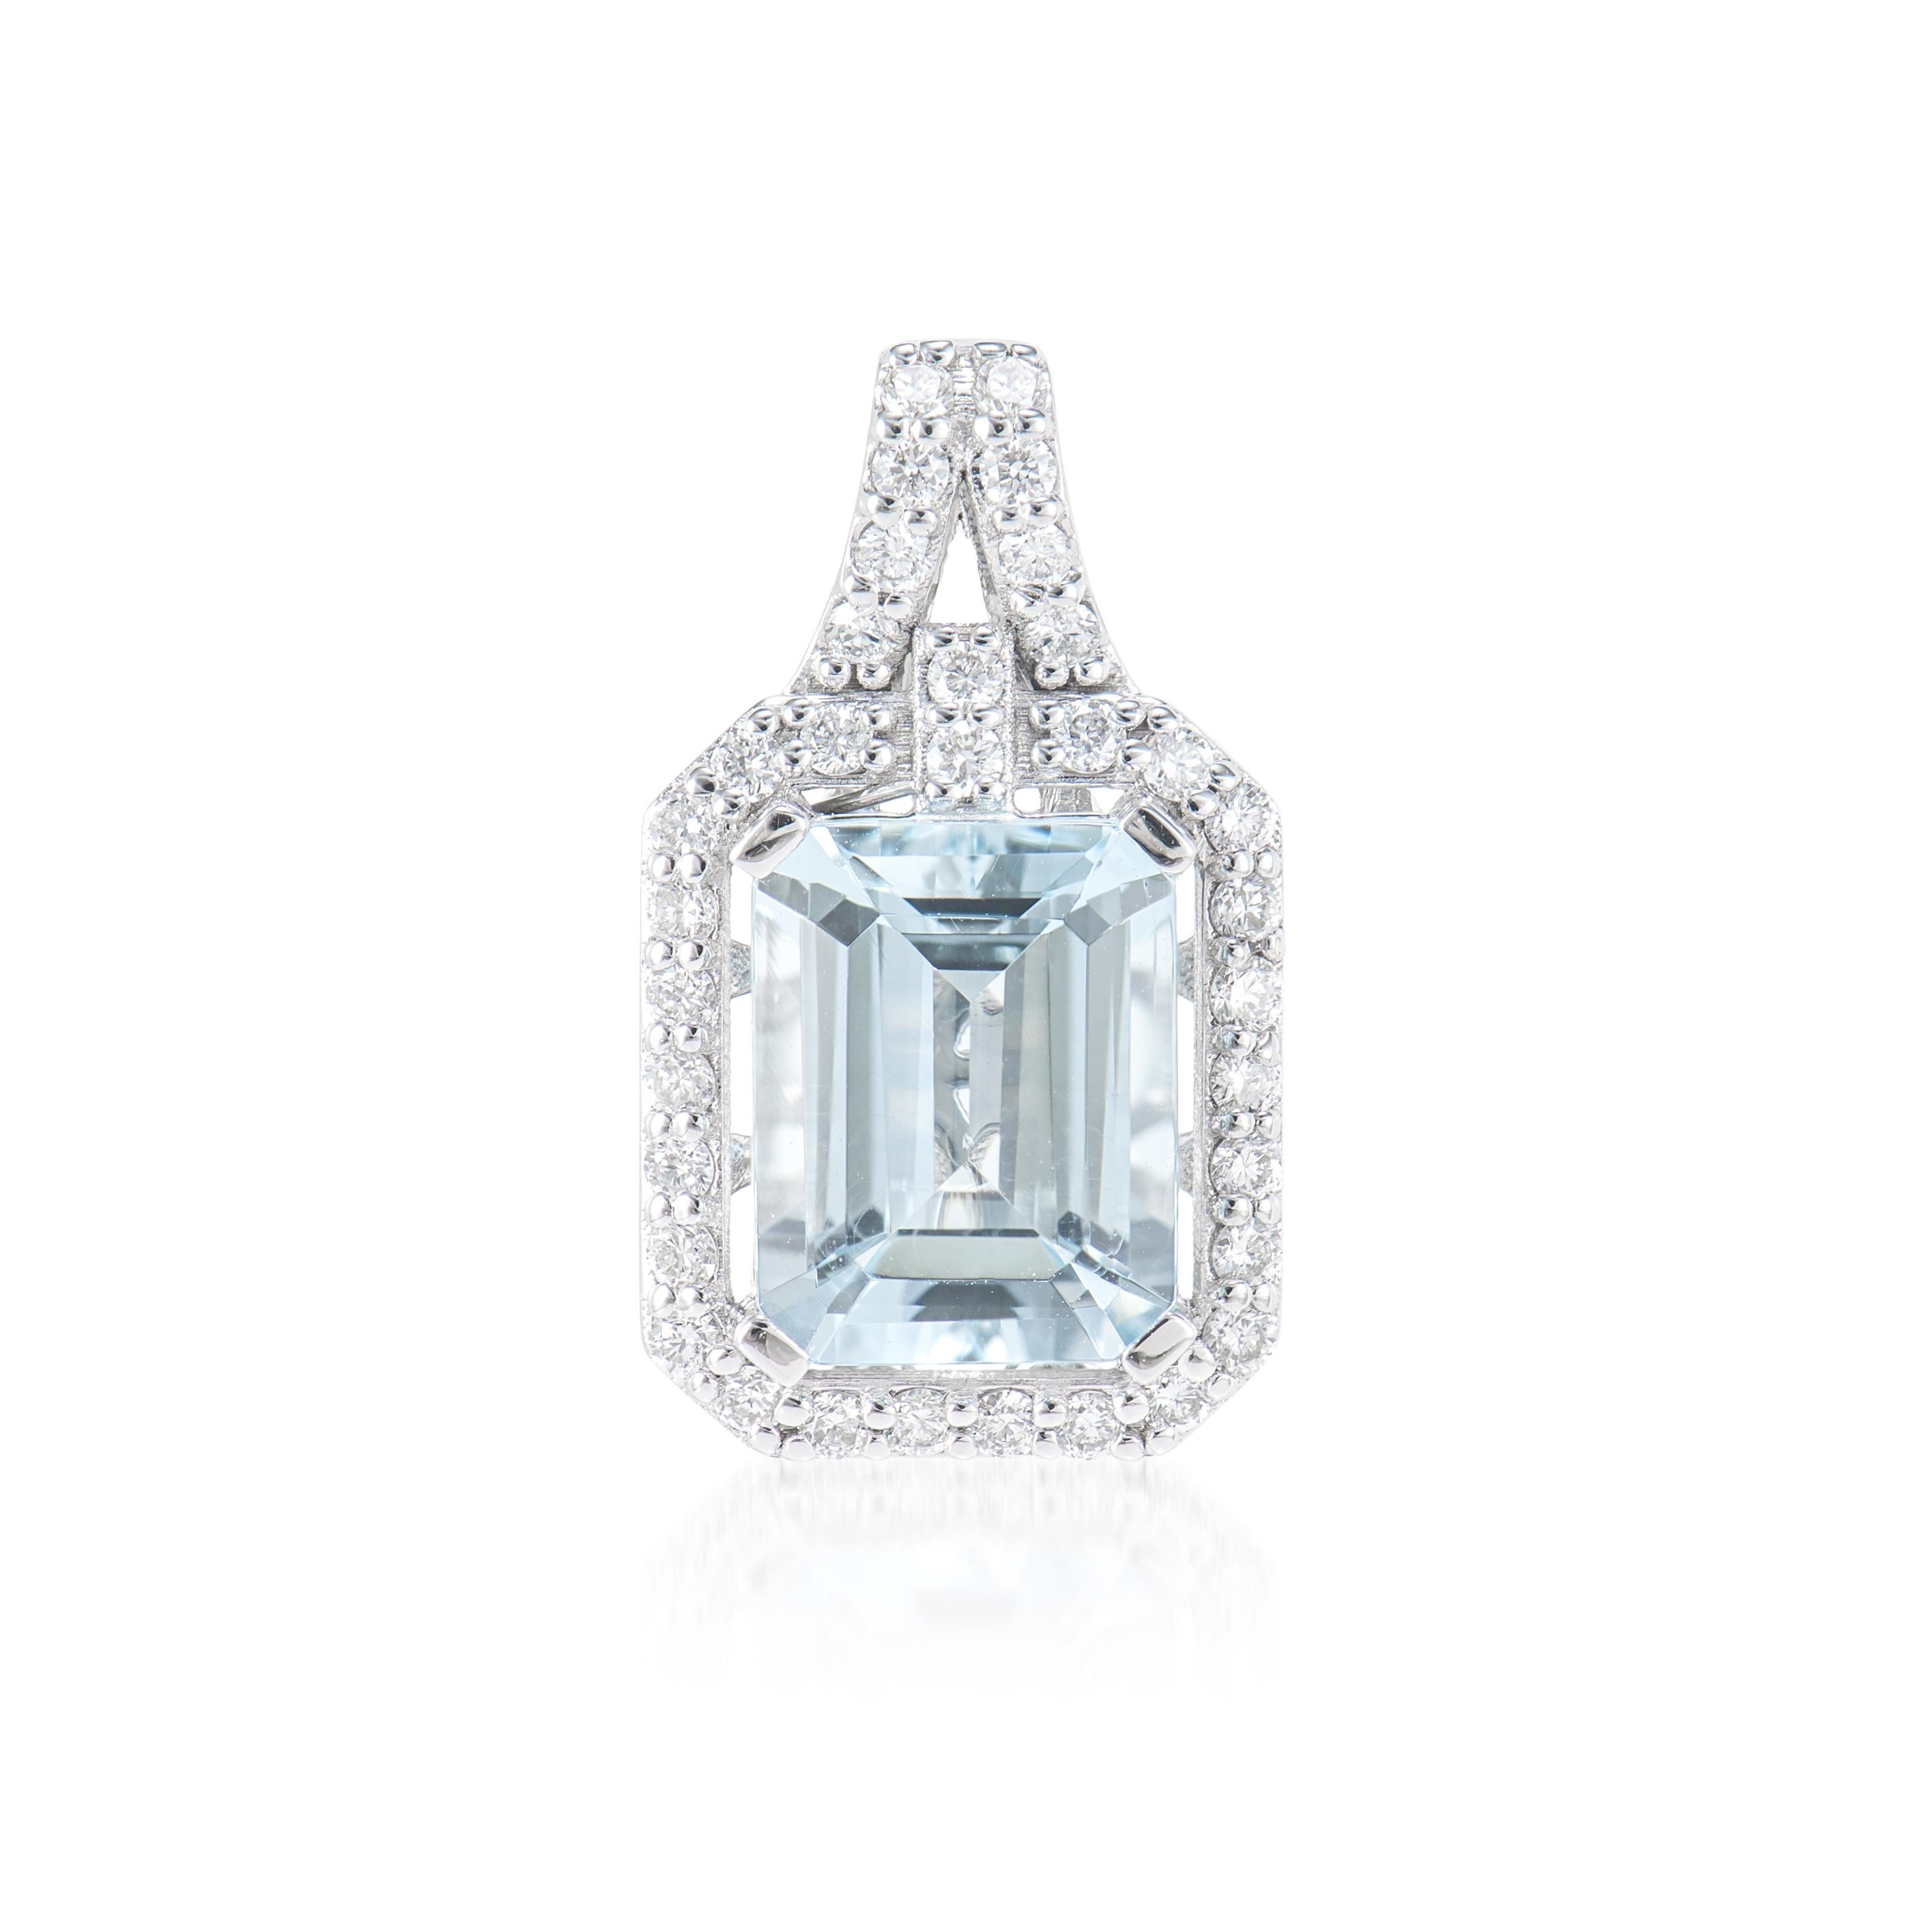 Contemporain Pendentif aigue-marine de 2,16 carats en or blanc 18 carats et diamants blancs. en vente